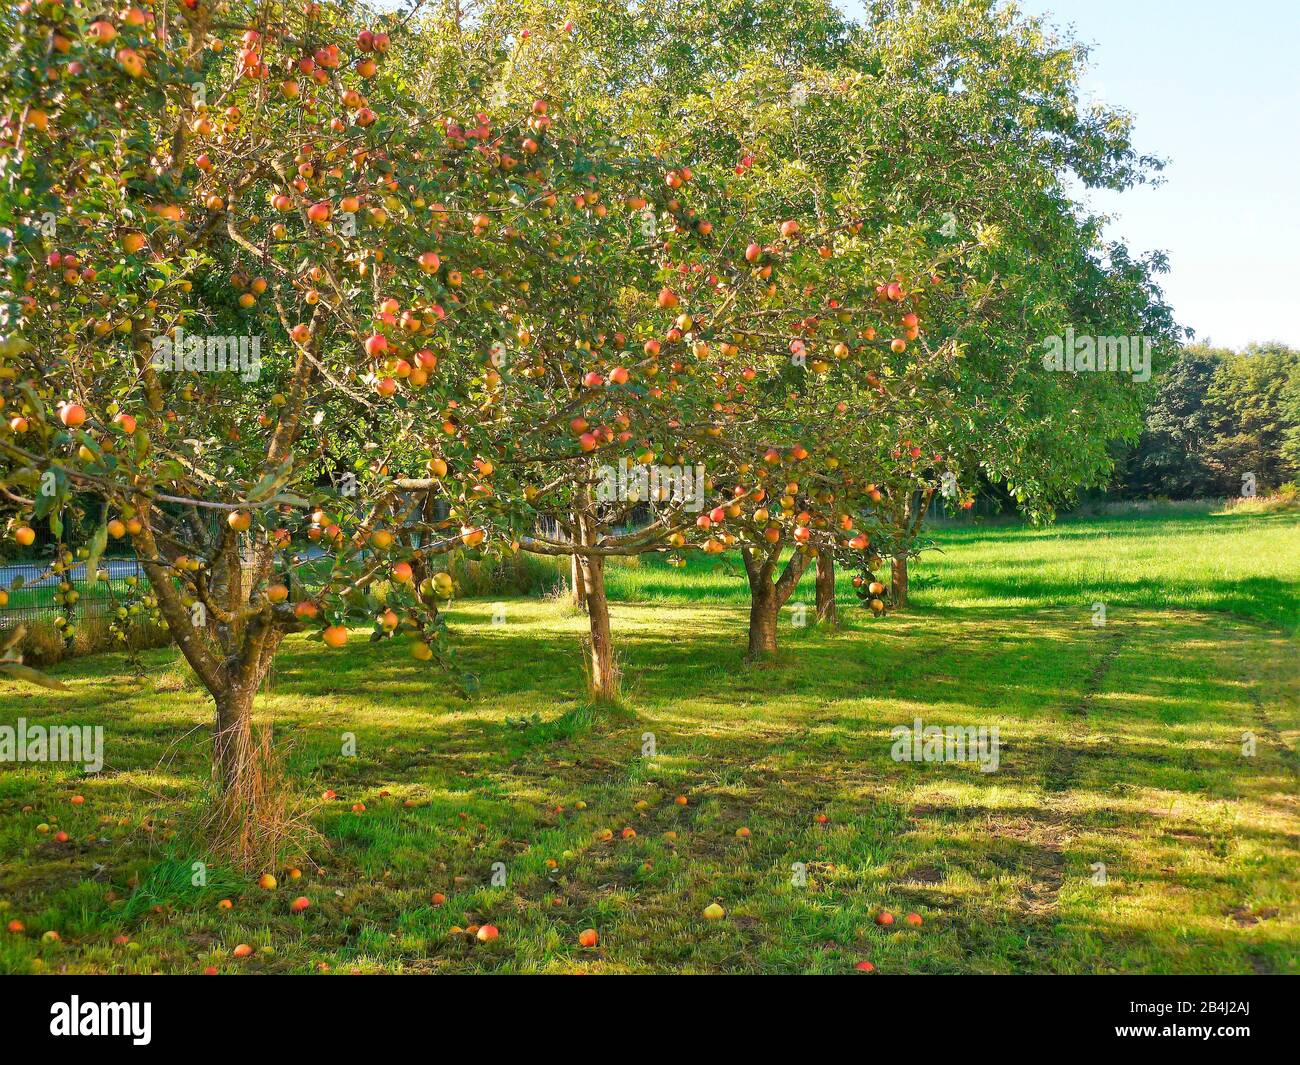 Germany, Bavaria, orchard, apple trees Stock Photo